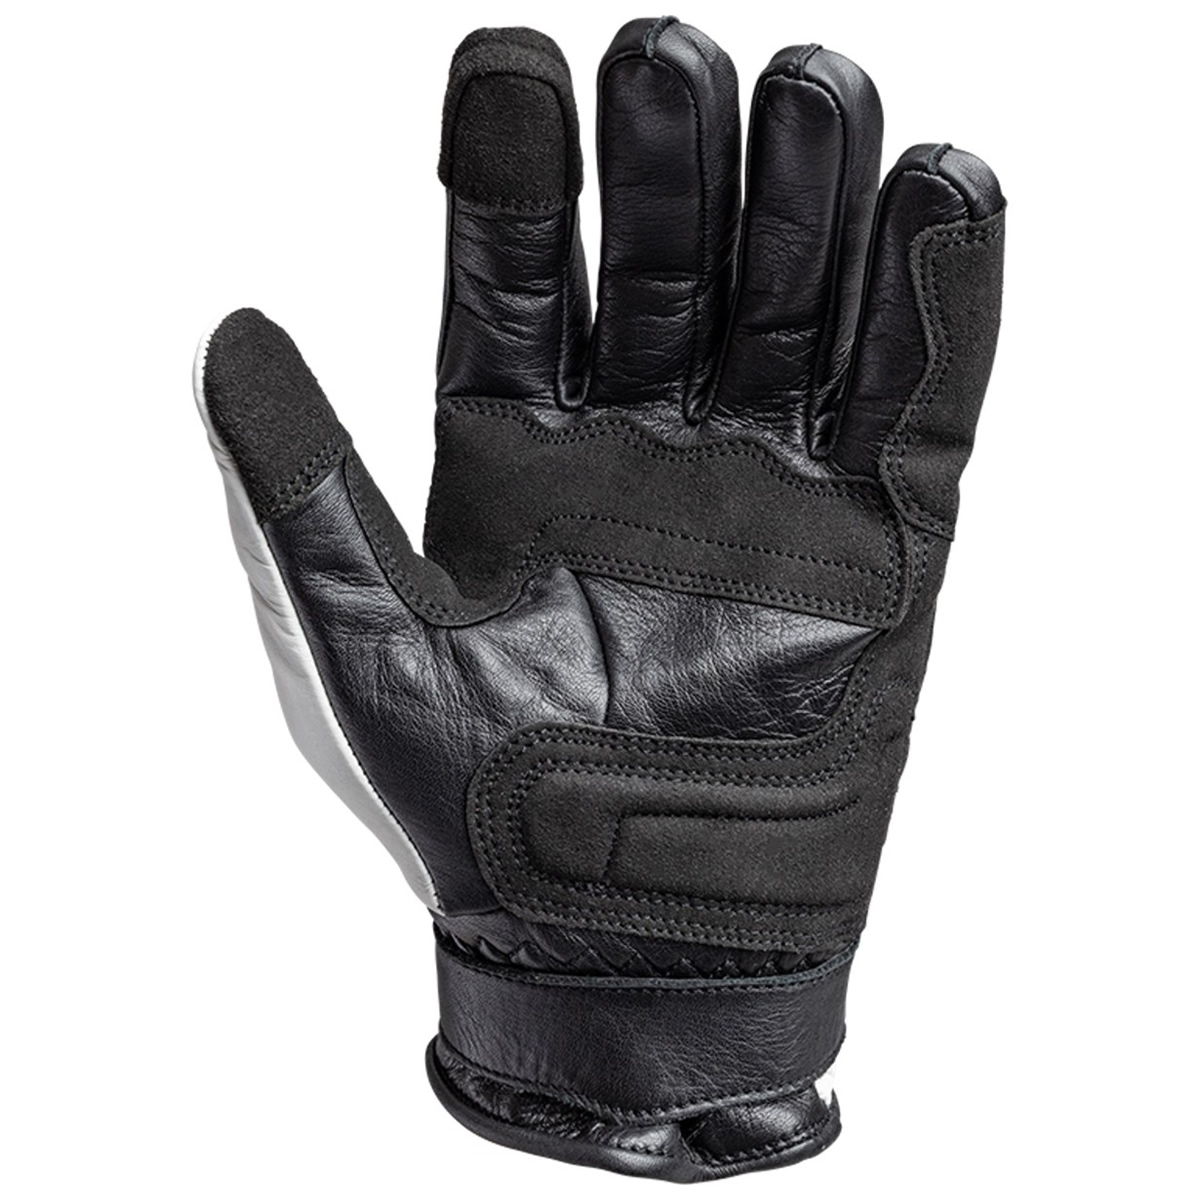 John Doe Tracker Race Handschuhe, weiß-schwarz